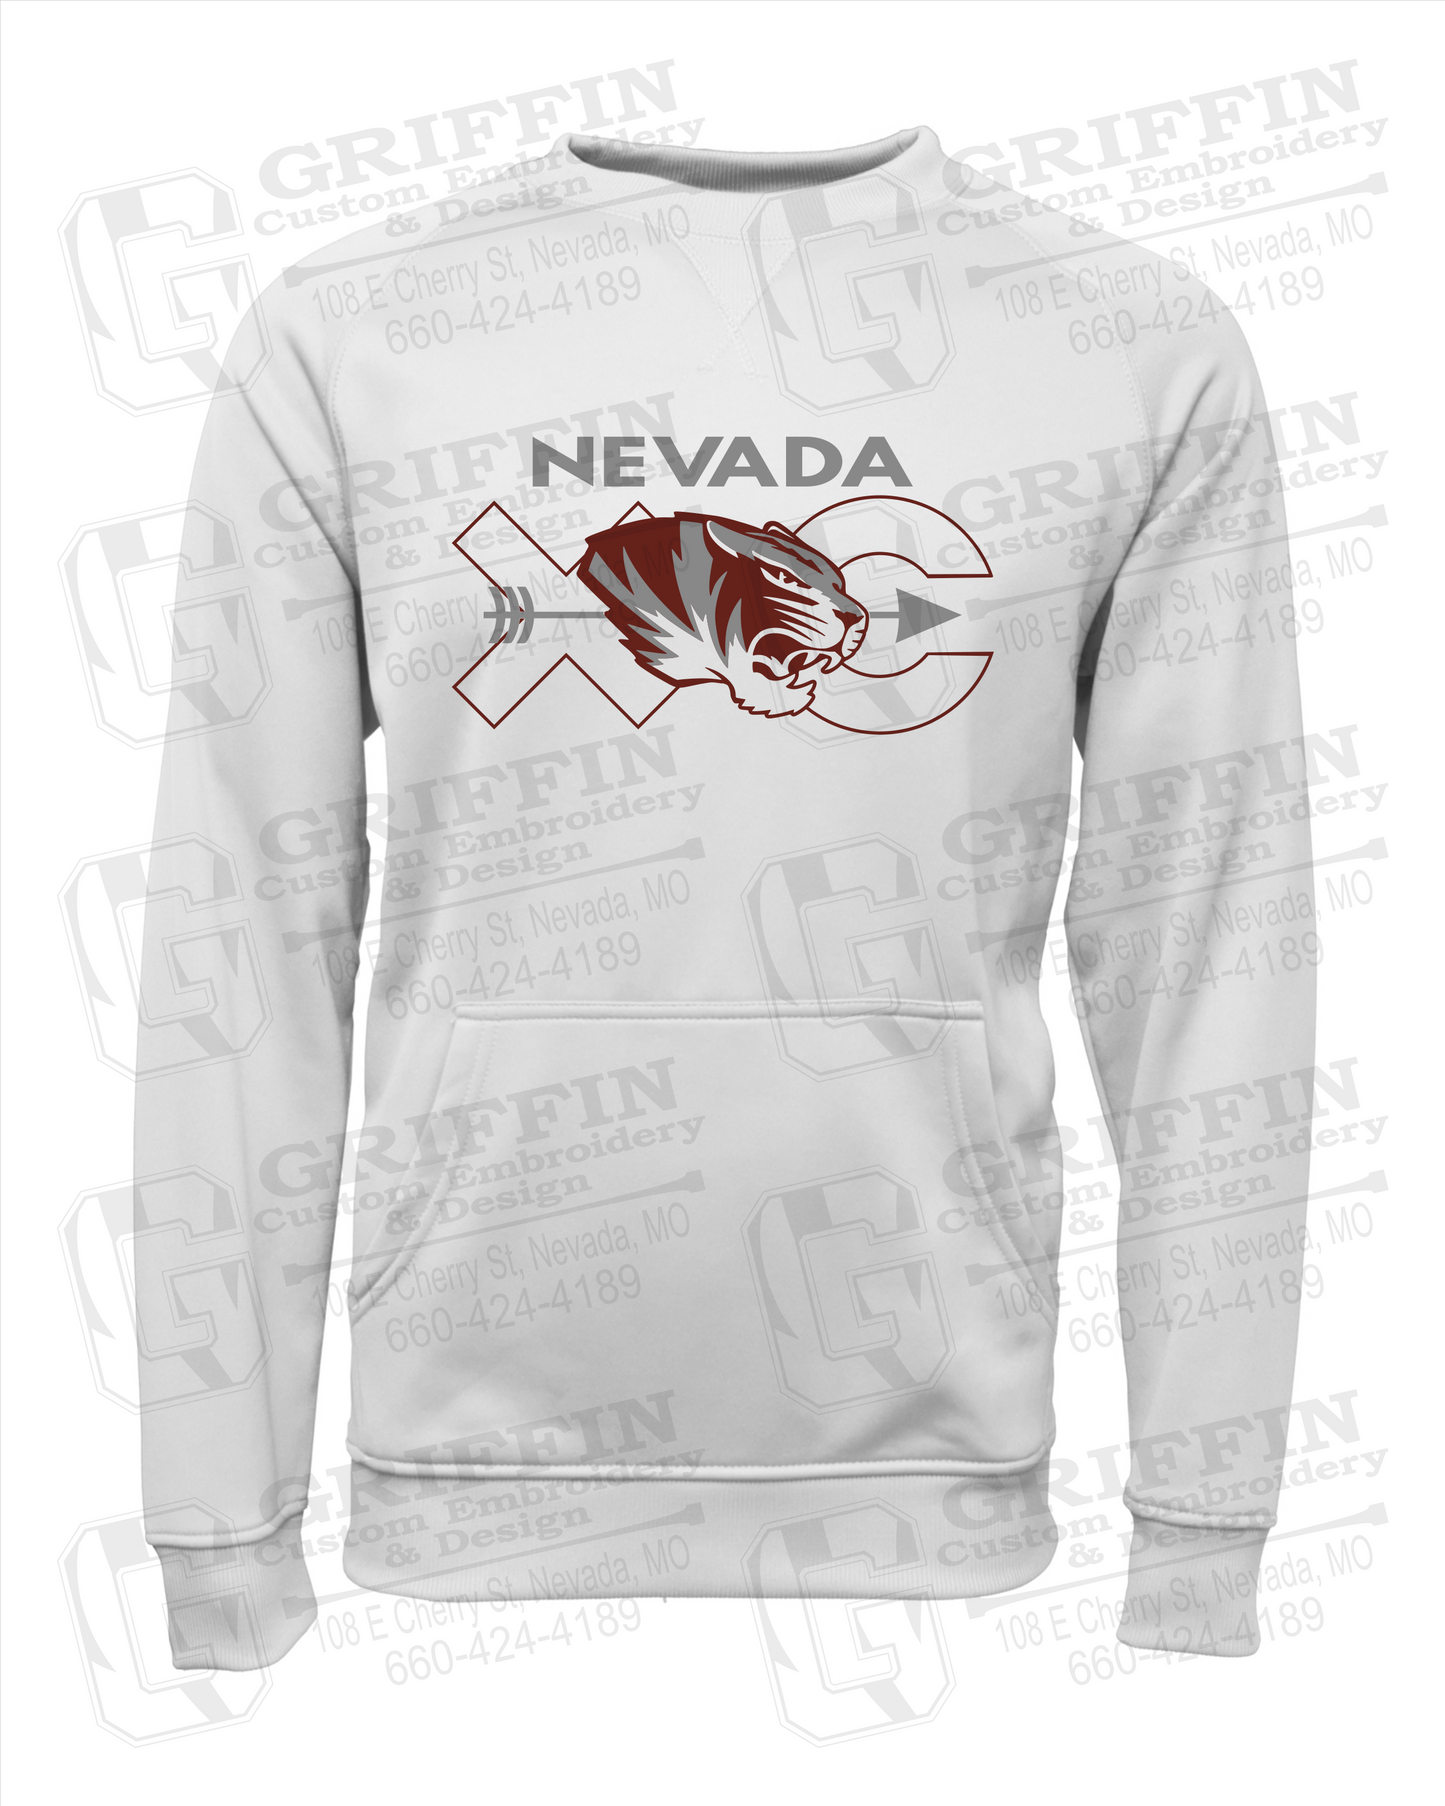 Nevada Tigers 23-T Youth Sweatshirt - Cross Country